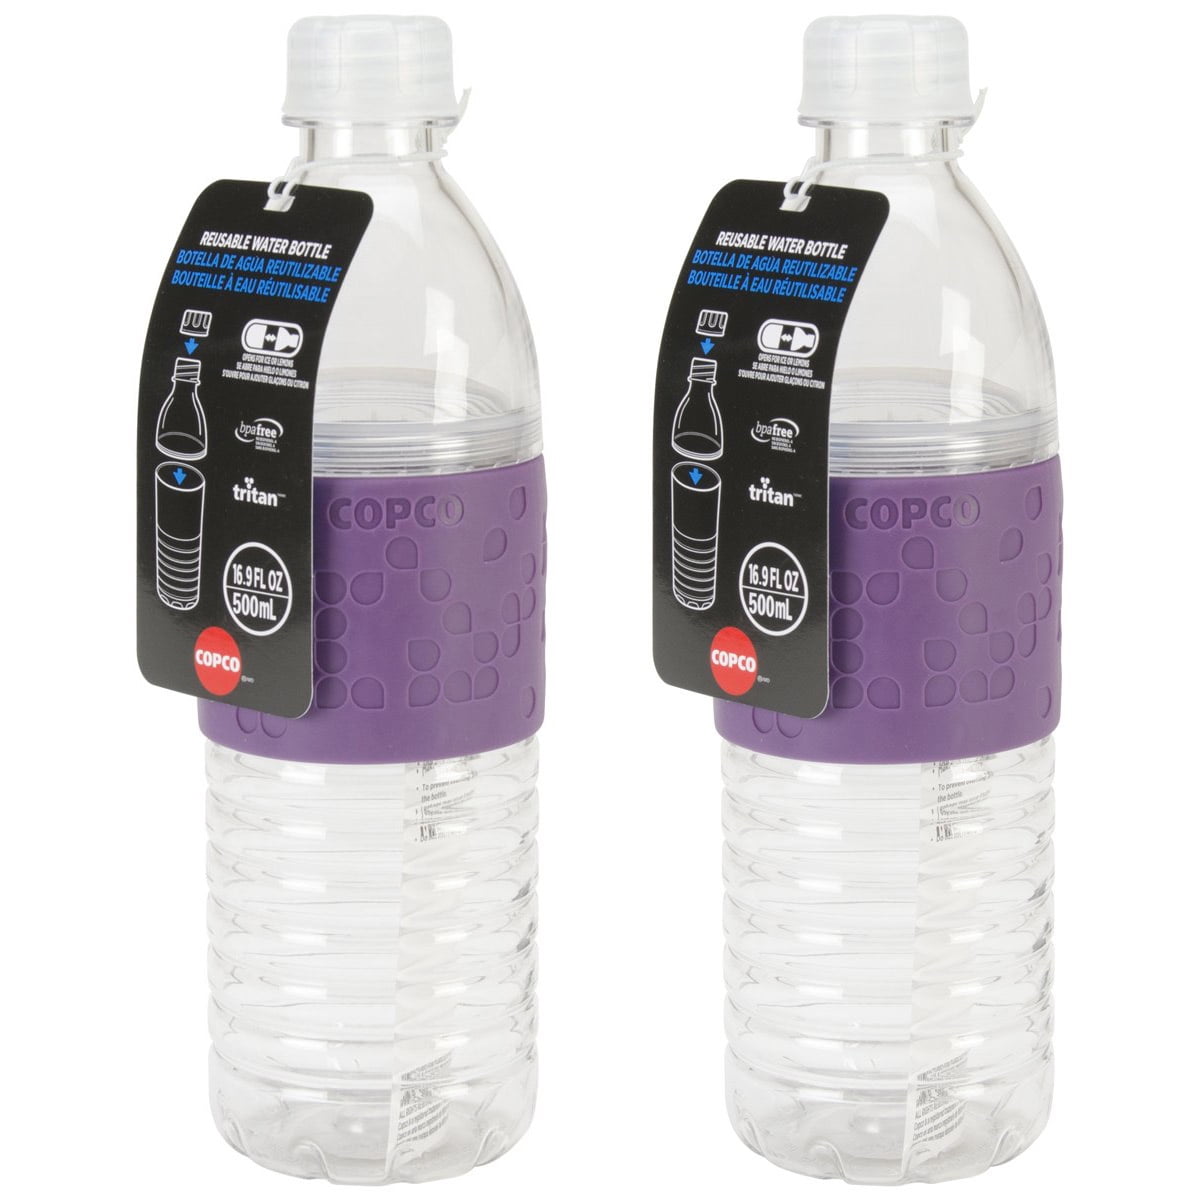 Contigo Kids 14 Oz Jessie Water Bottle W/ Autopop Lid - Pineapple Trash  Pandas : Target